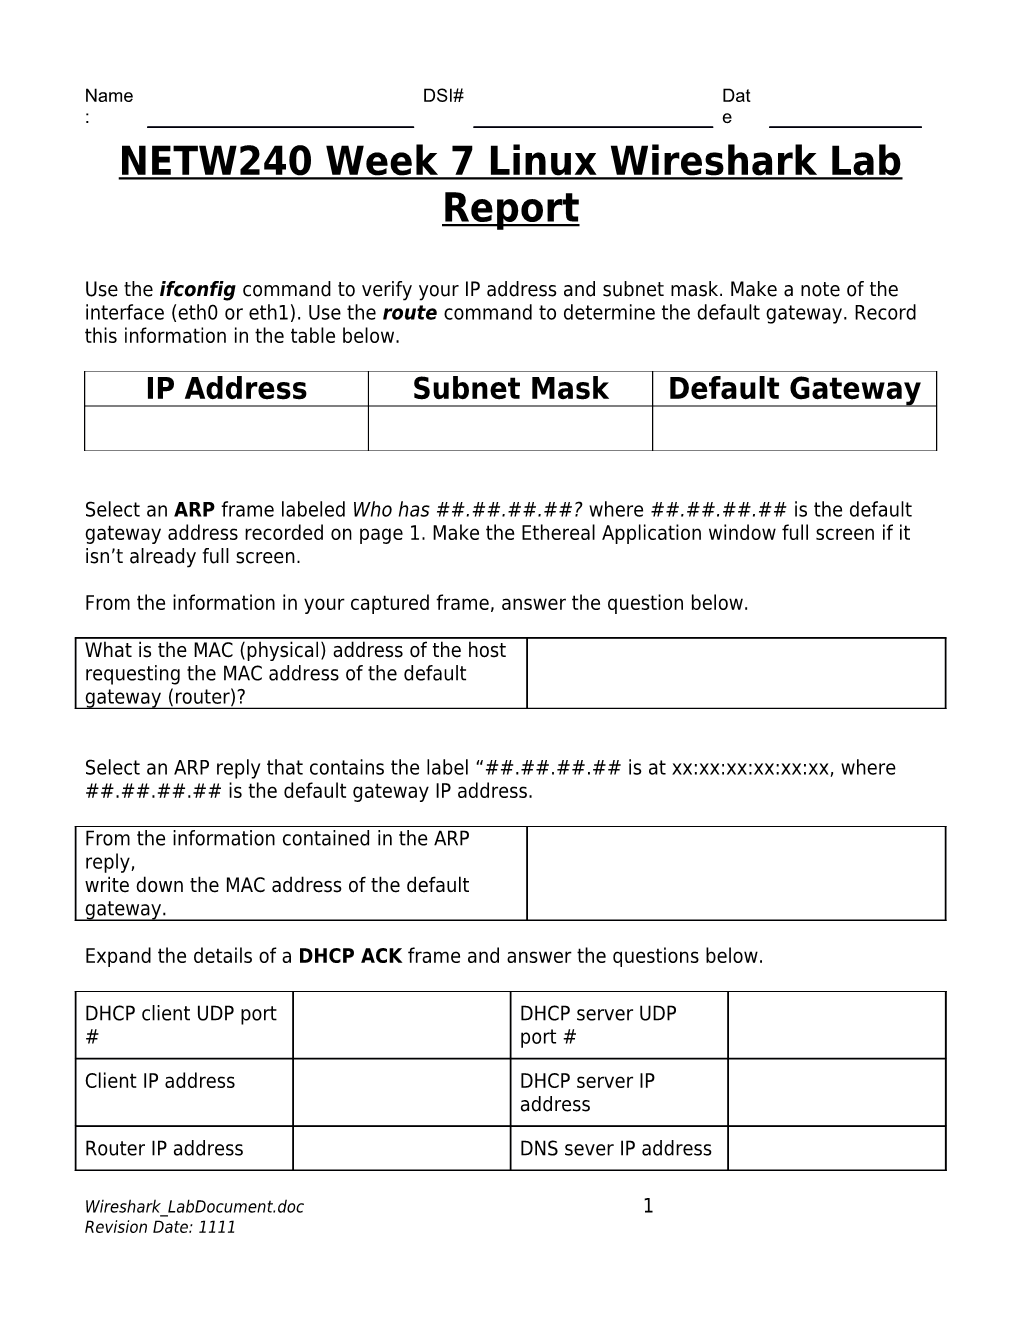 NETW240 Week 7 Linux Wireshark Lab Report